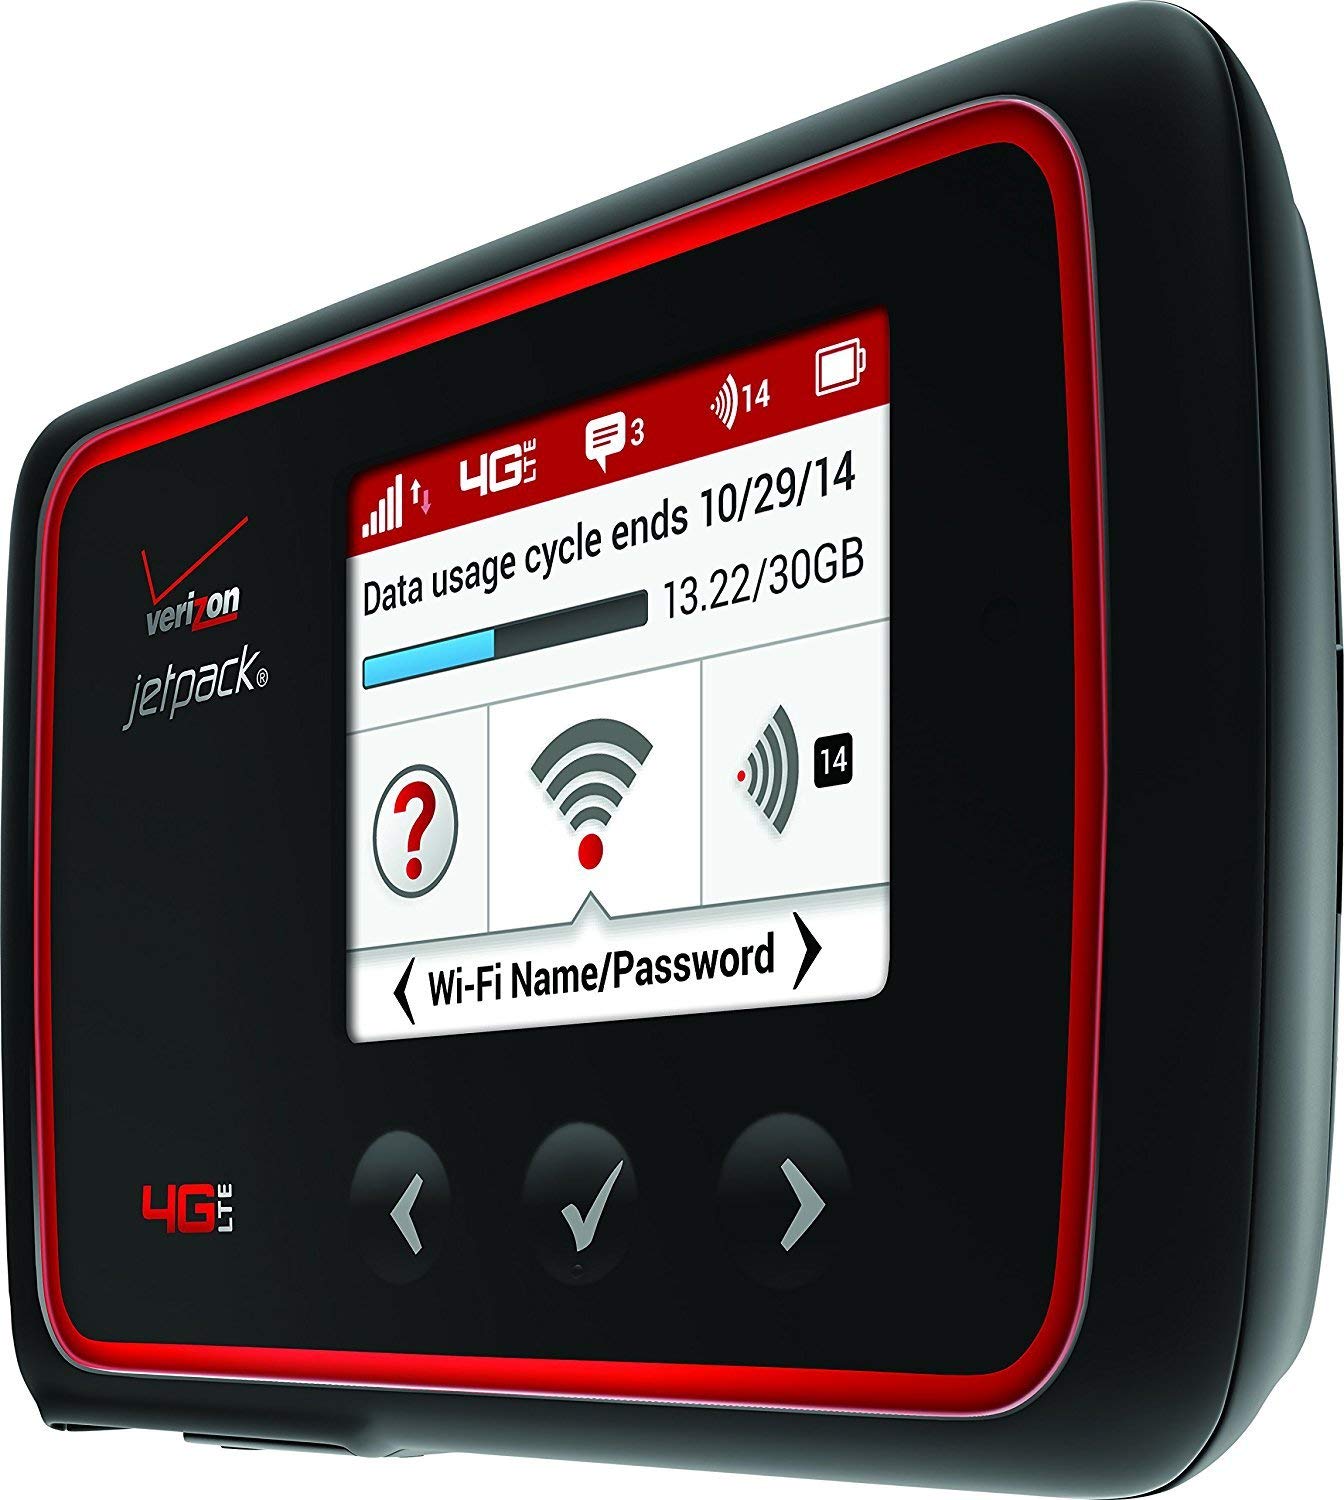 verizon-wireless-mifi-6620l-jetpack-4g-lte-mobile-hotspot-certified